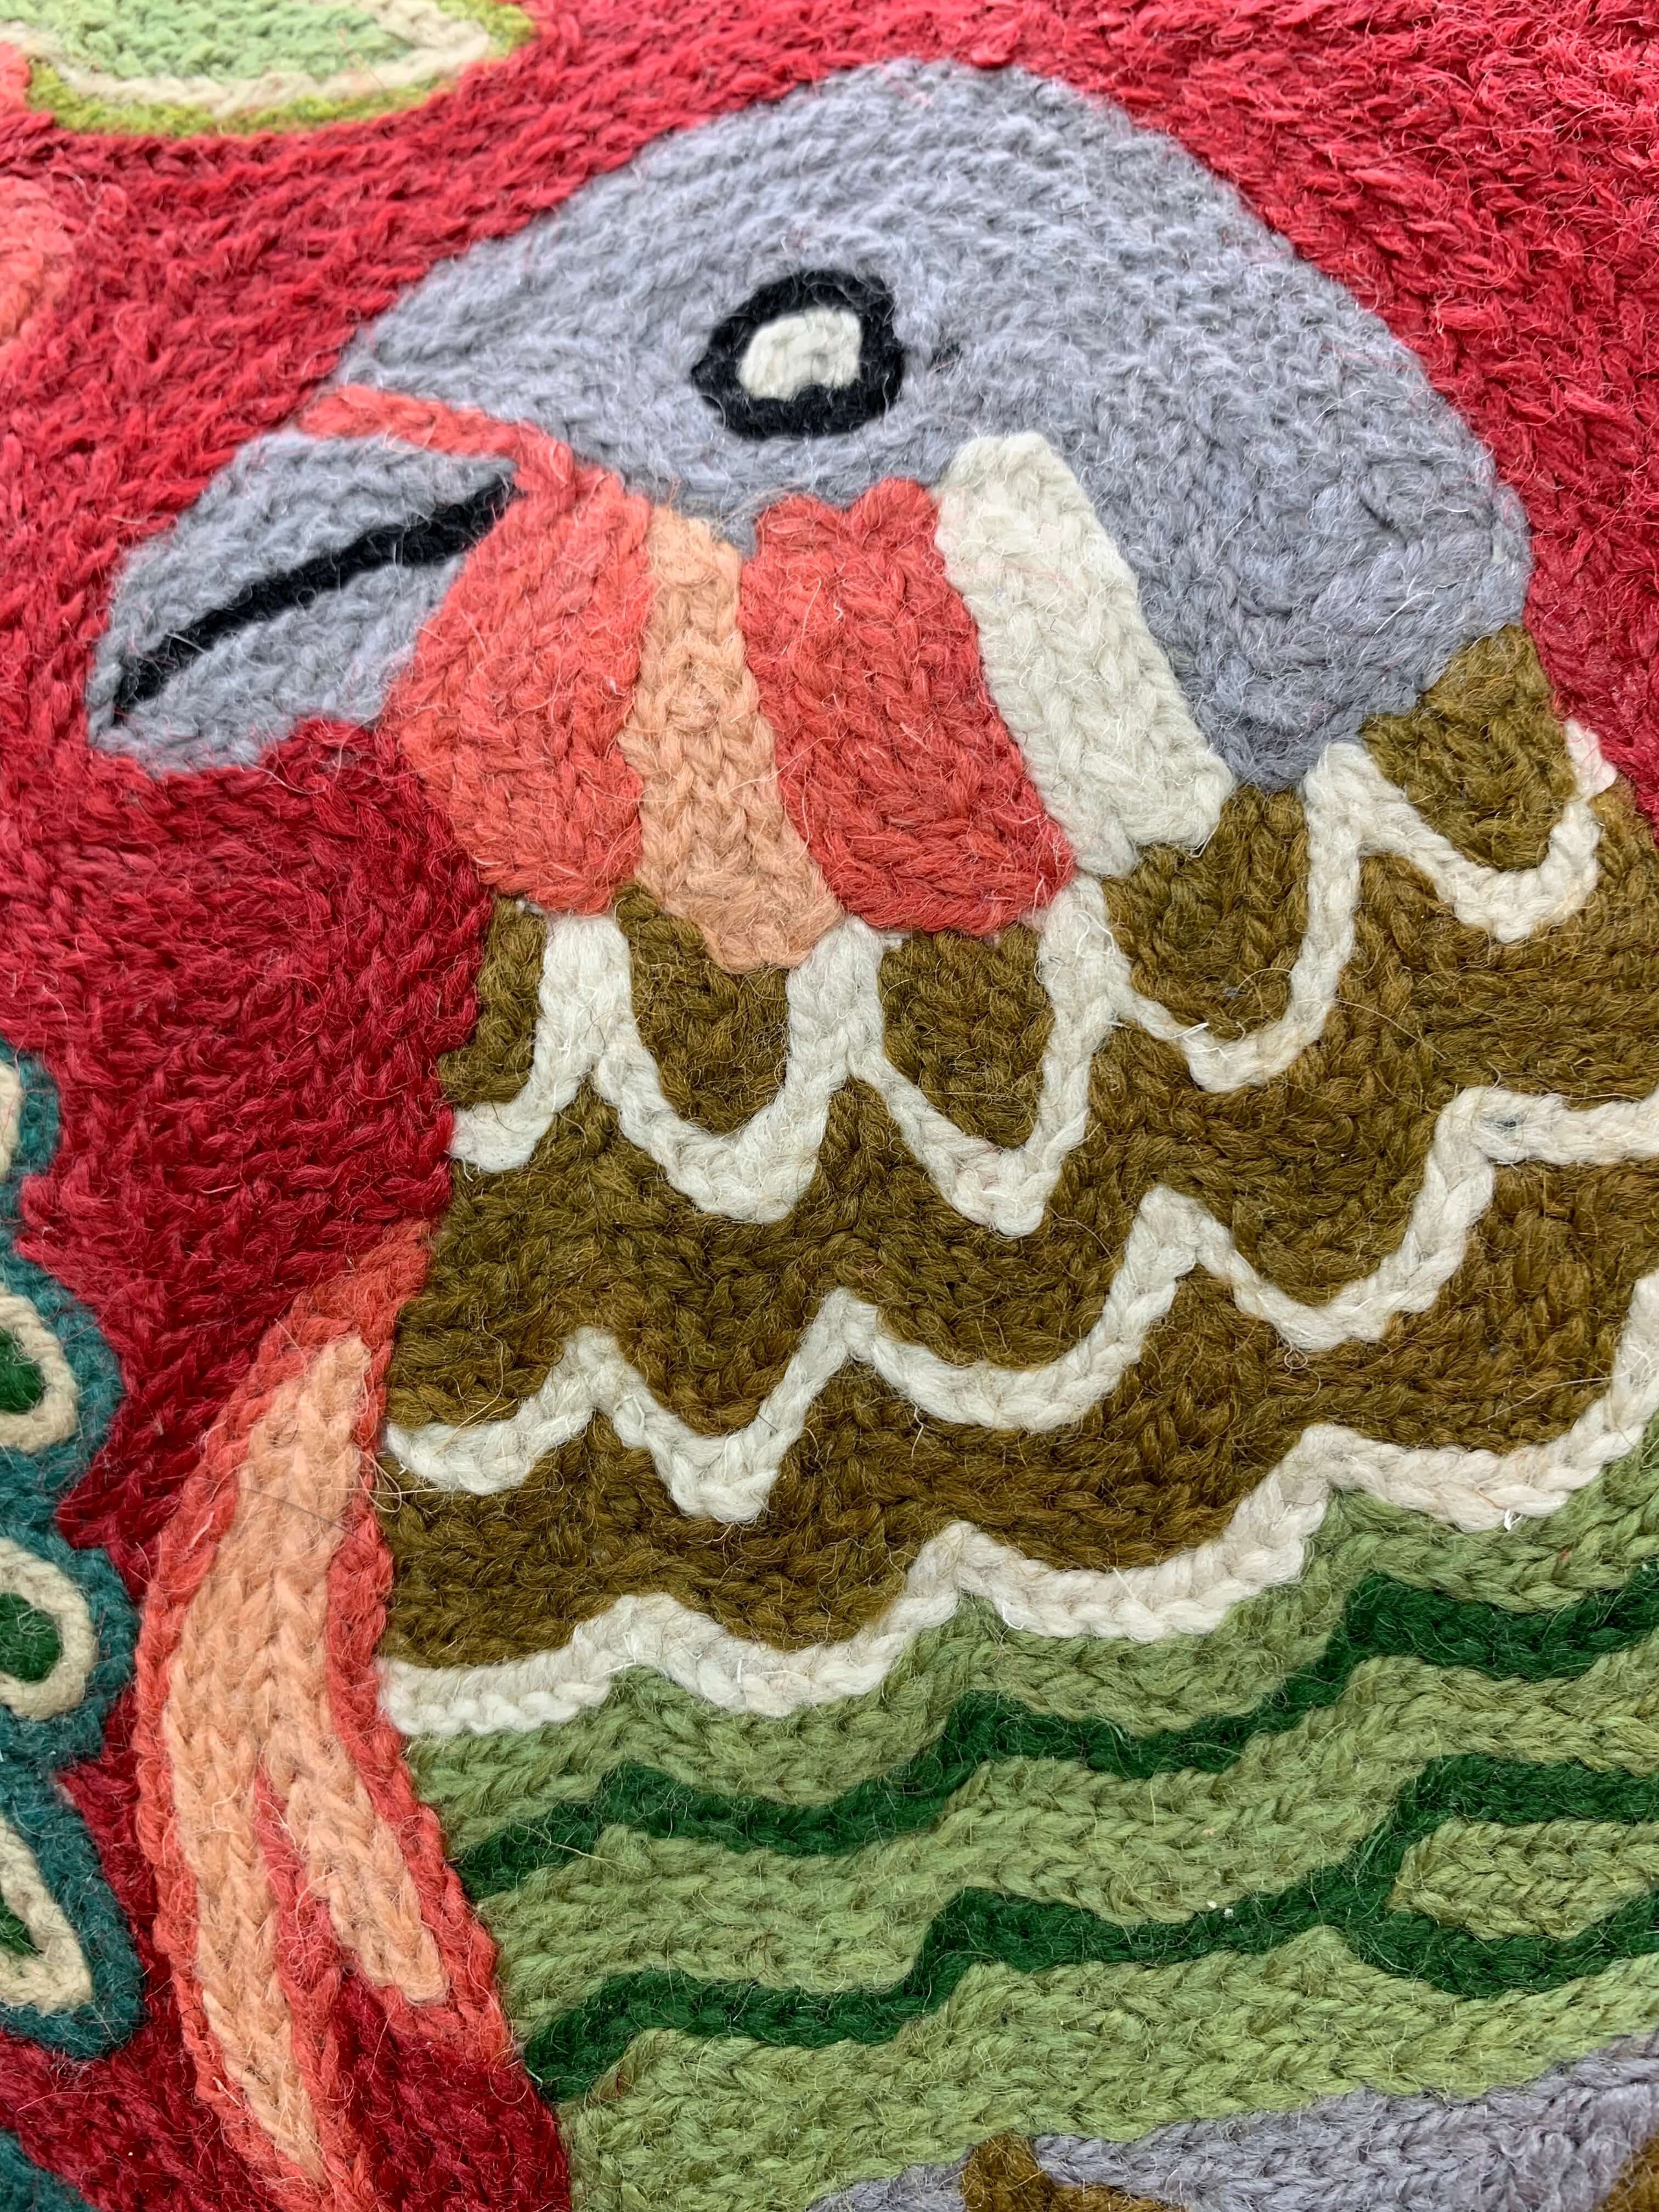 Handmade Chain Stitched Cushion Covers